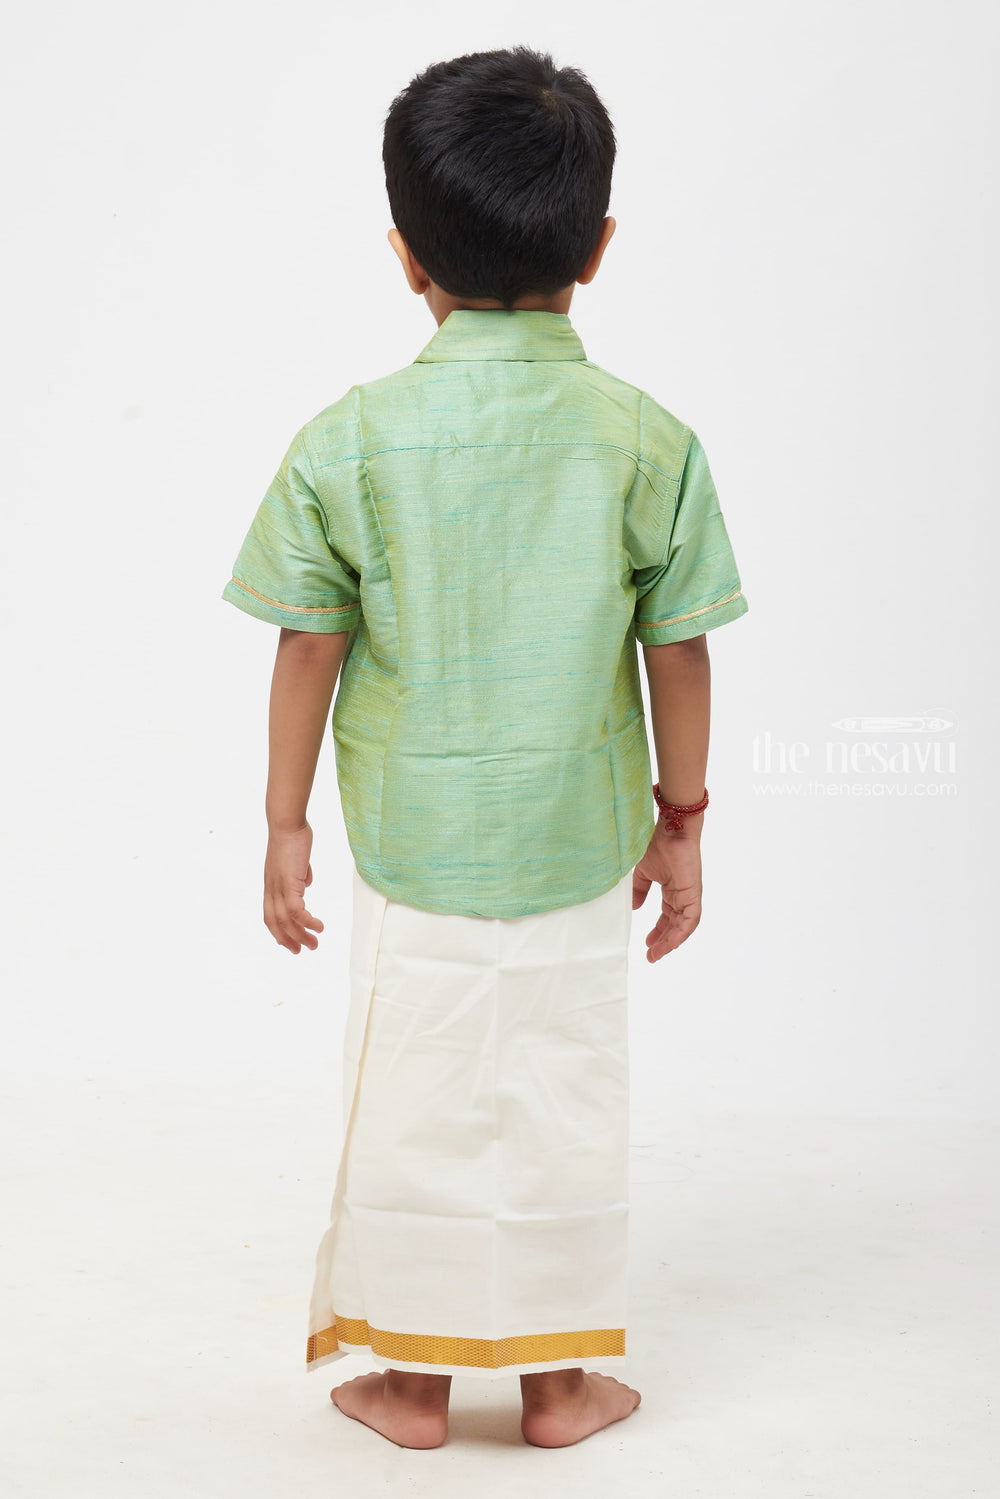 The Nesavu Boys Silk Shirt Boys Lustrous Sea Green Silk Shirt: Journey into the Heart of Nature's Charm Nesavu Boys Enchanting Sea Green Silk Shirt: Natures Essence Embodied in Silken Elegance | The Nesavu